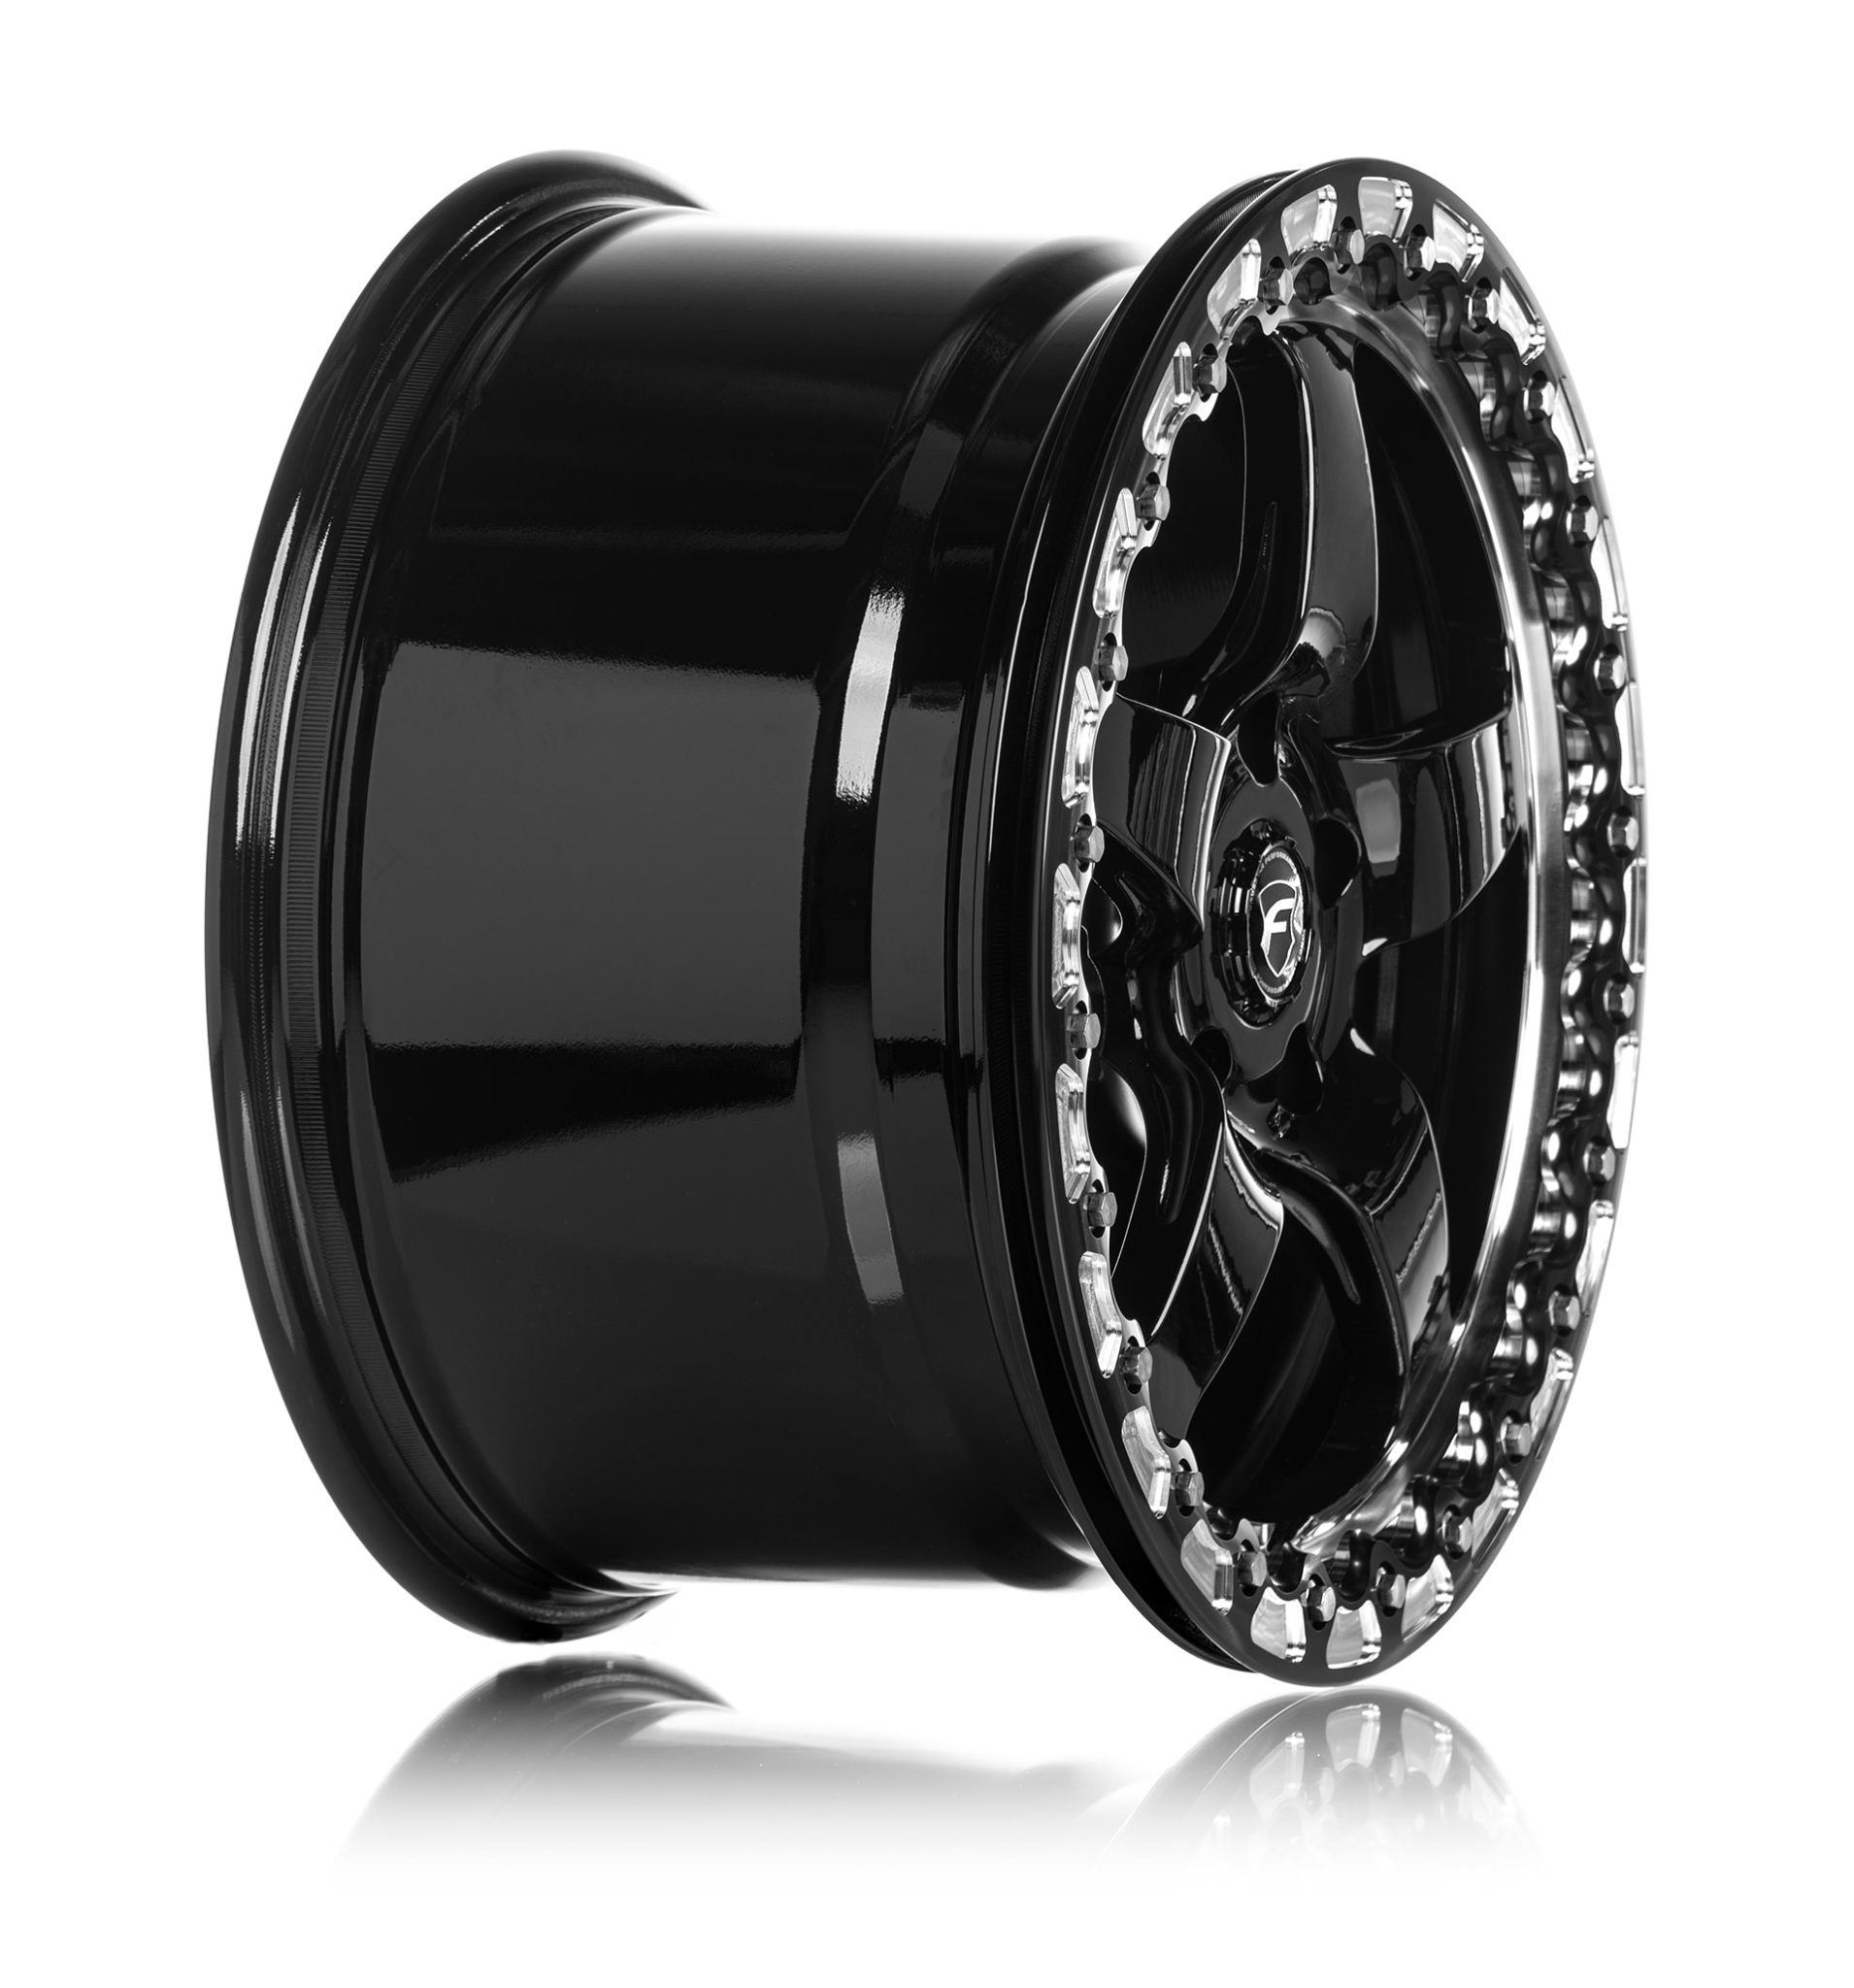 Forgestar D5 BEADLOCK Drag Racing Wheels - Gloss Black w/Machined Lip - 18x11 - Sold Individually - Motorsports LA